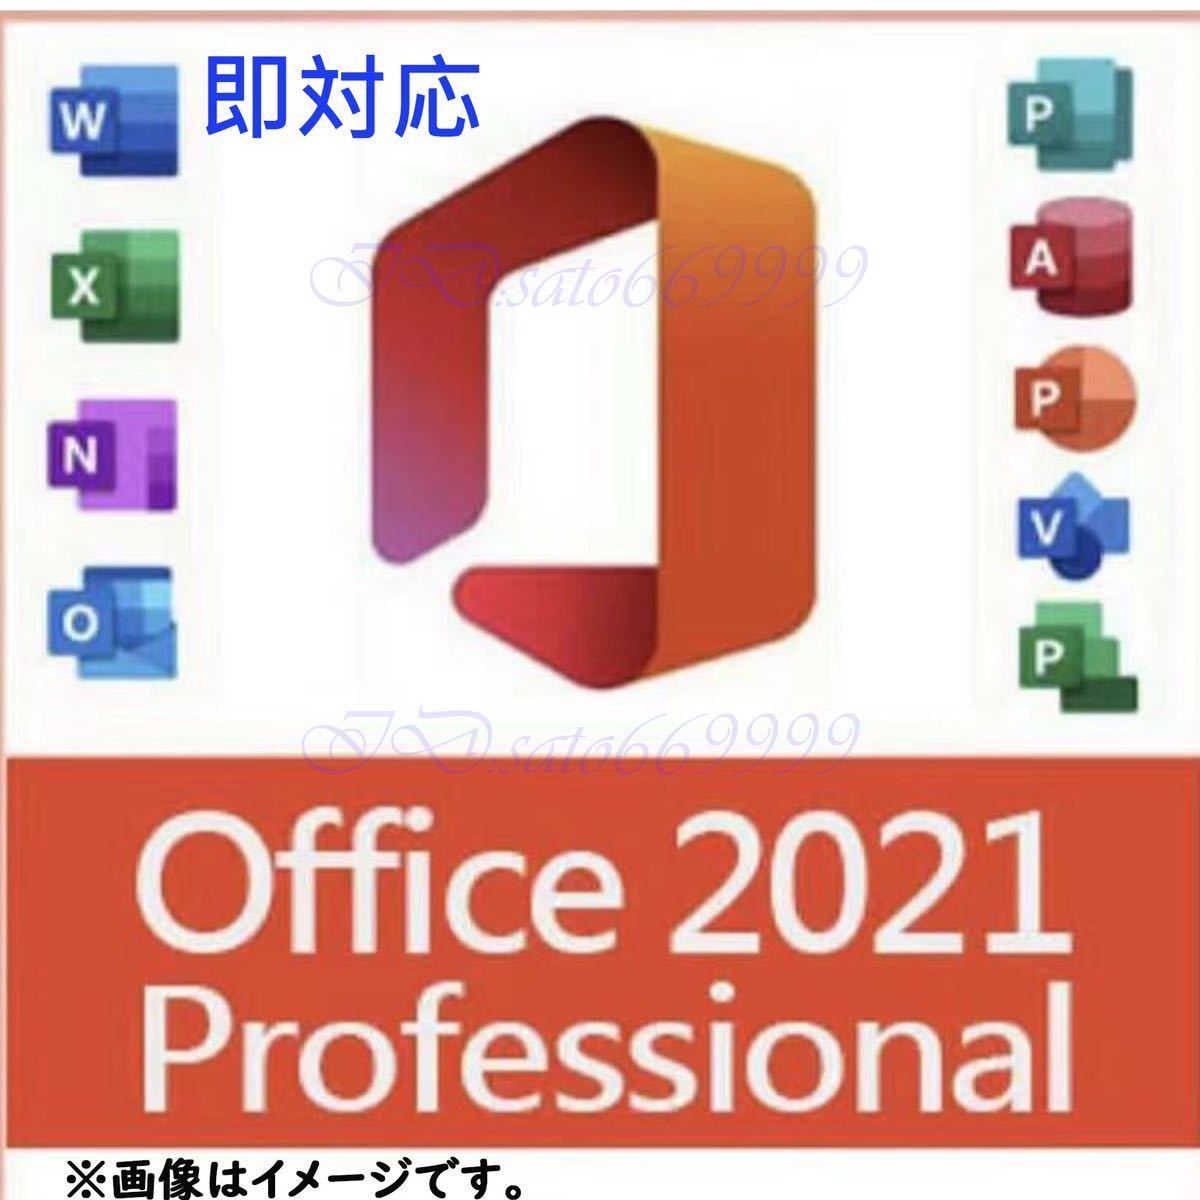 【Office2021 ダウンロード版 】Microsoft Office 2021 Professional Plus プロダクトキー オフィス2021 認証保証 手順書付き土_画像1